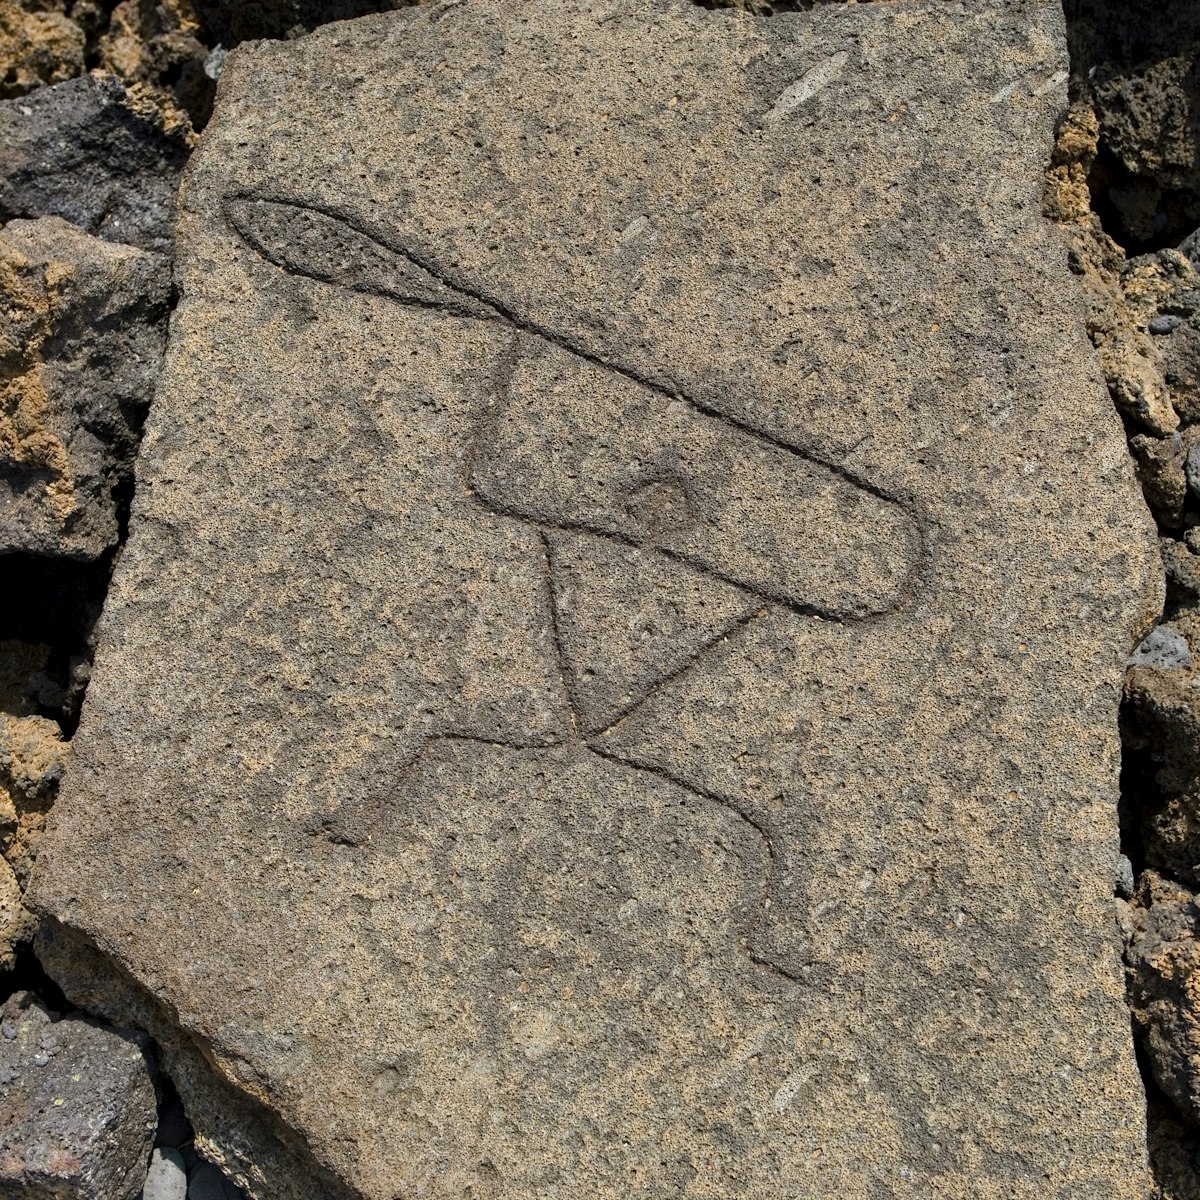 26467-129
Big Island, Hawaii, Kohala Coast, North America, United States
Puako Petroglyph Preserve, South Kohala.